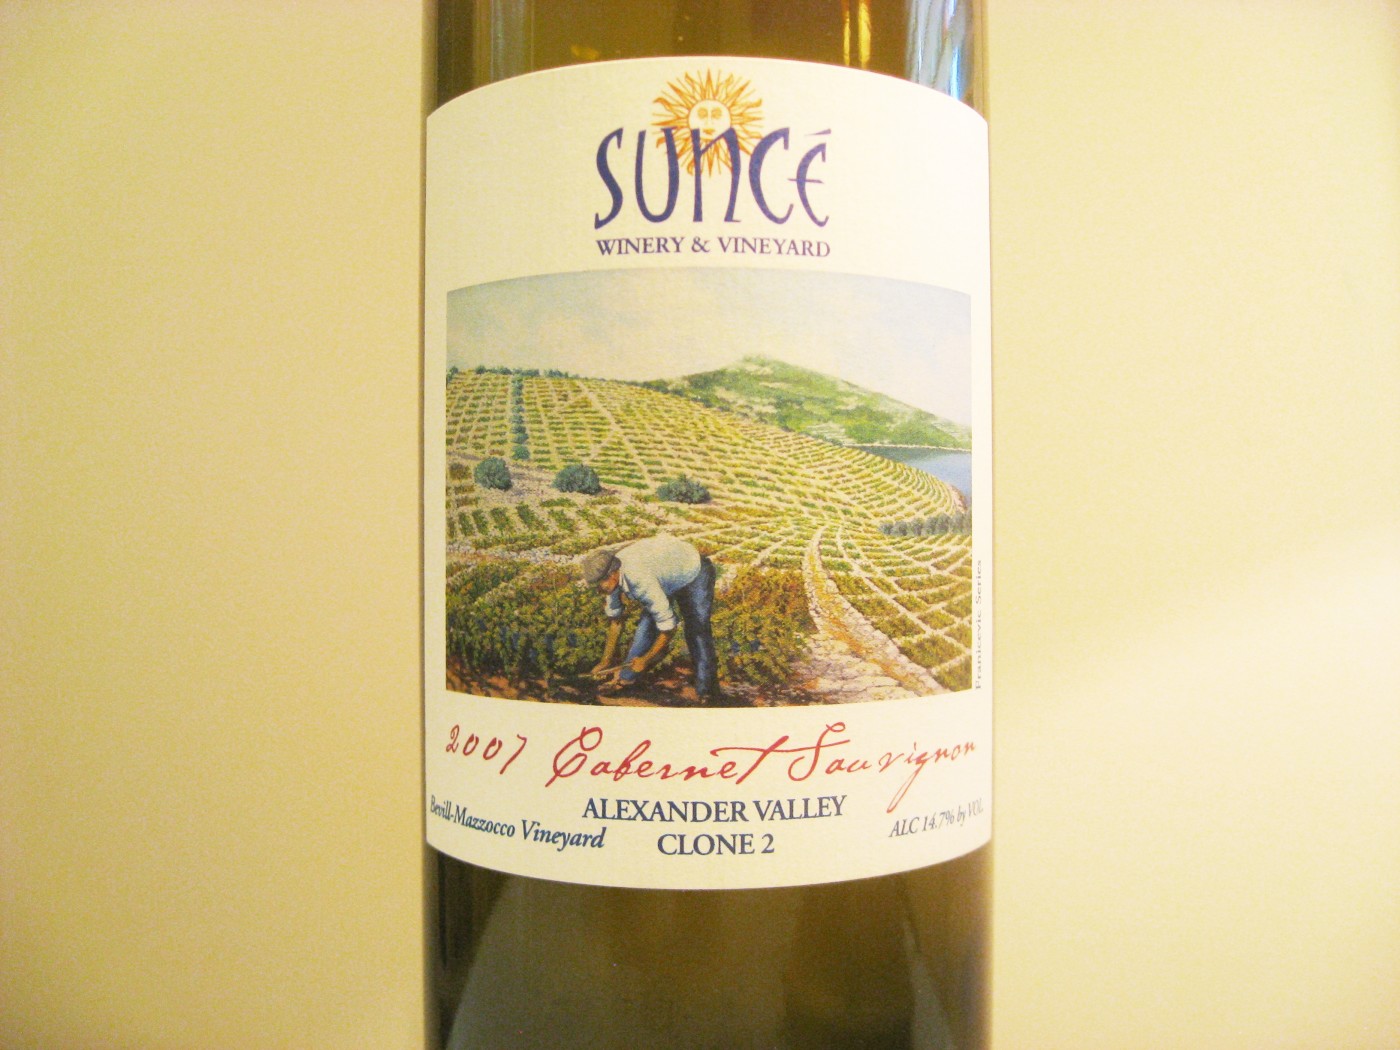 Sunce Winery & Vineyard, Cabernet Sauvignon 2007, Clone 2, Bevill-Mazzocco Vineyard, Alexander Valley, California, Wine Casual